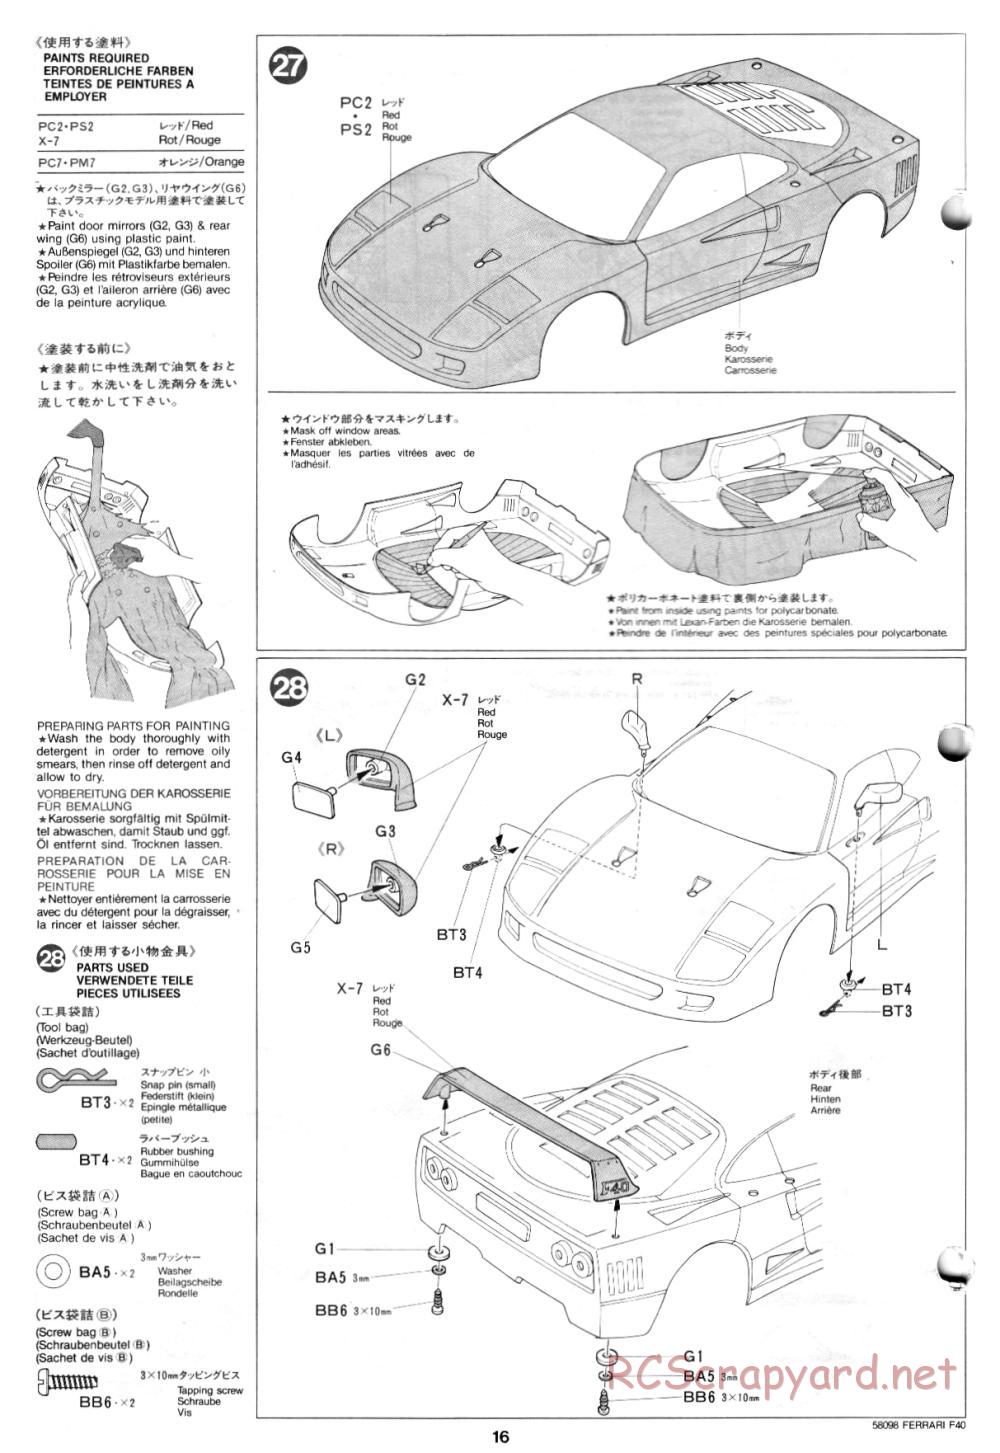 Tamiya - Ferrari F40 - 58098 - Manual - Page 16